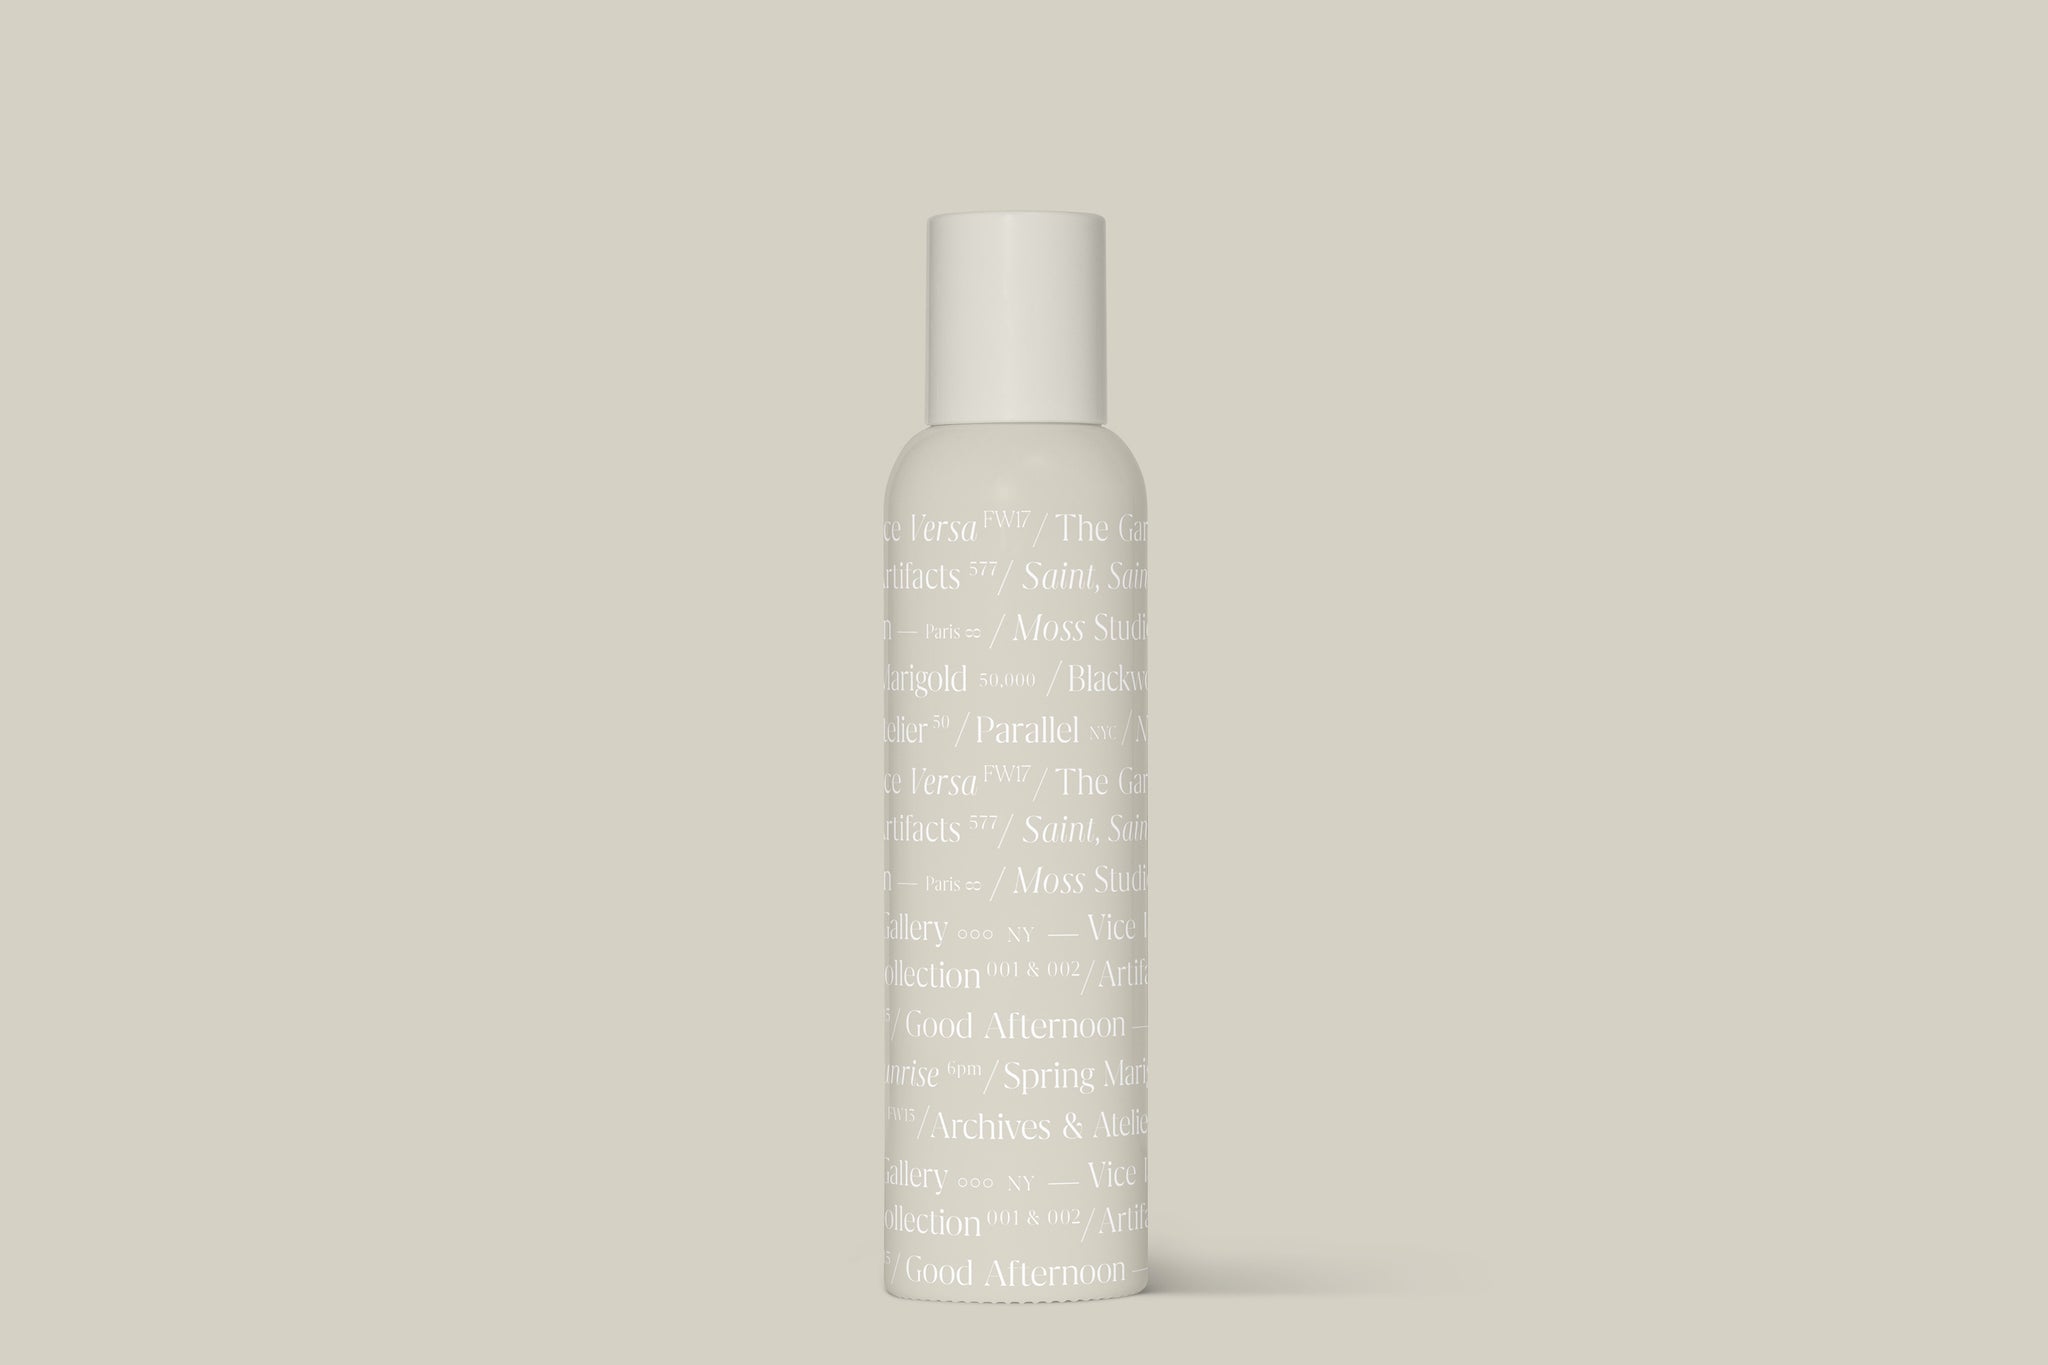 Round Cosmetic Bottle Mockup - Copal Studio Packaging Mockups For Designers